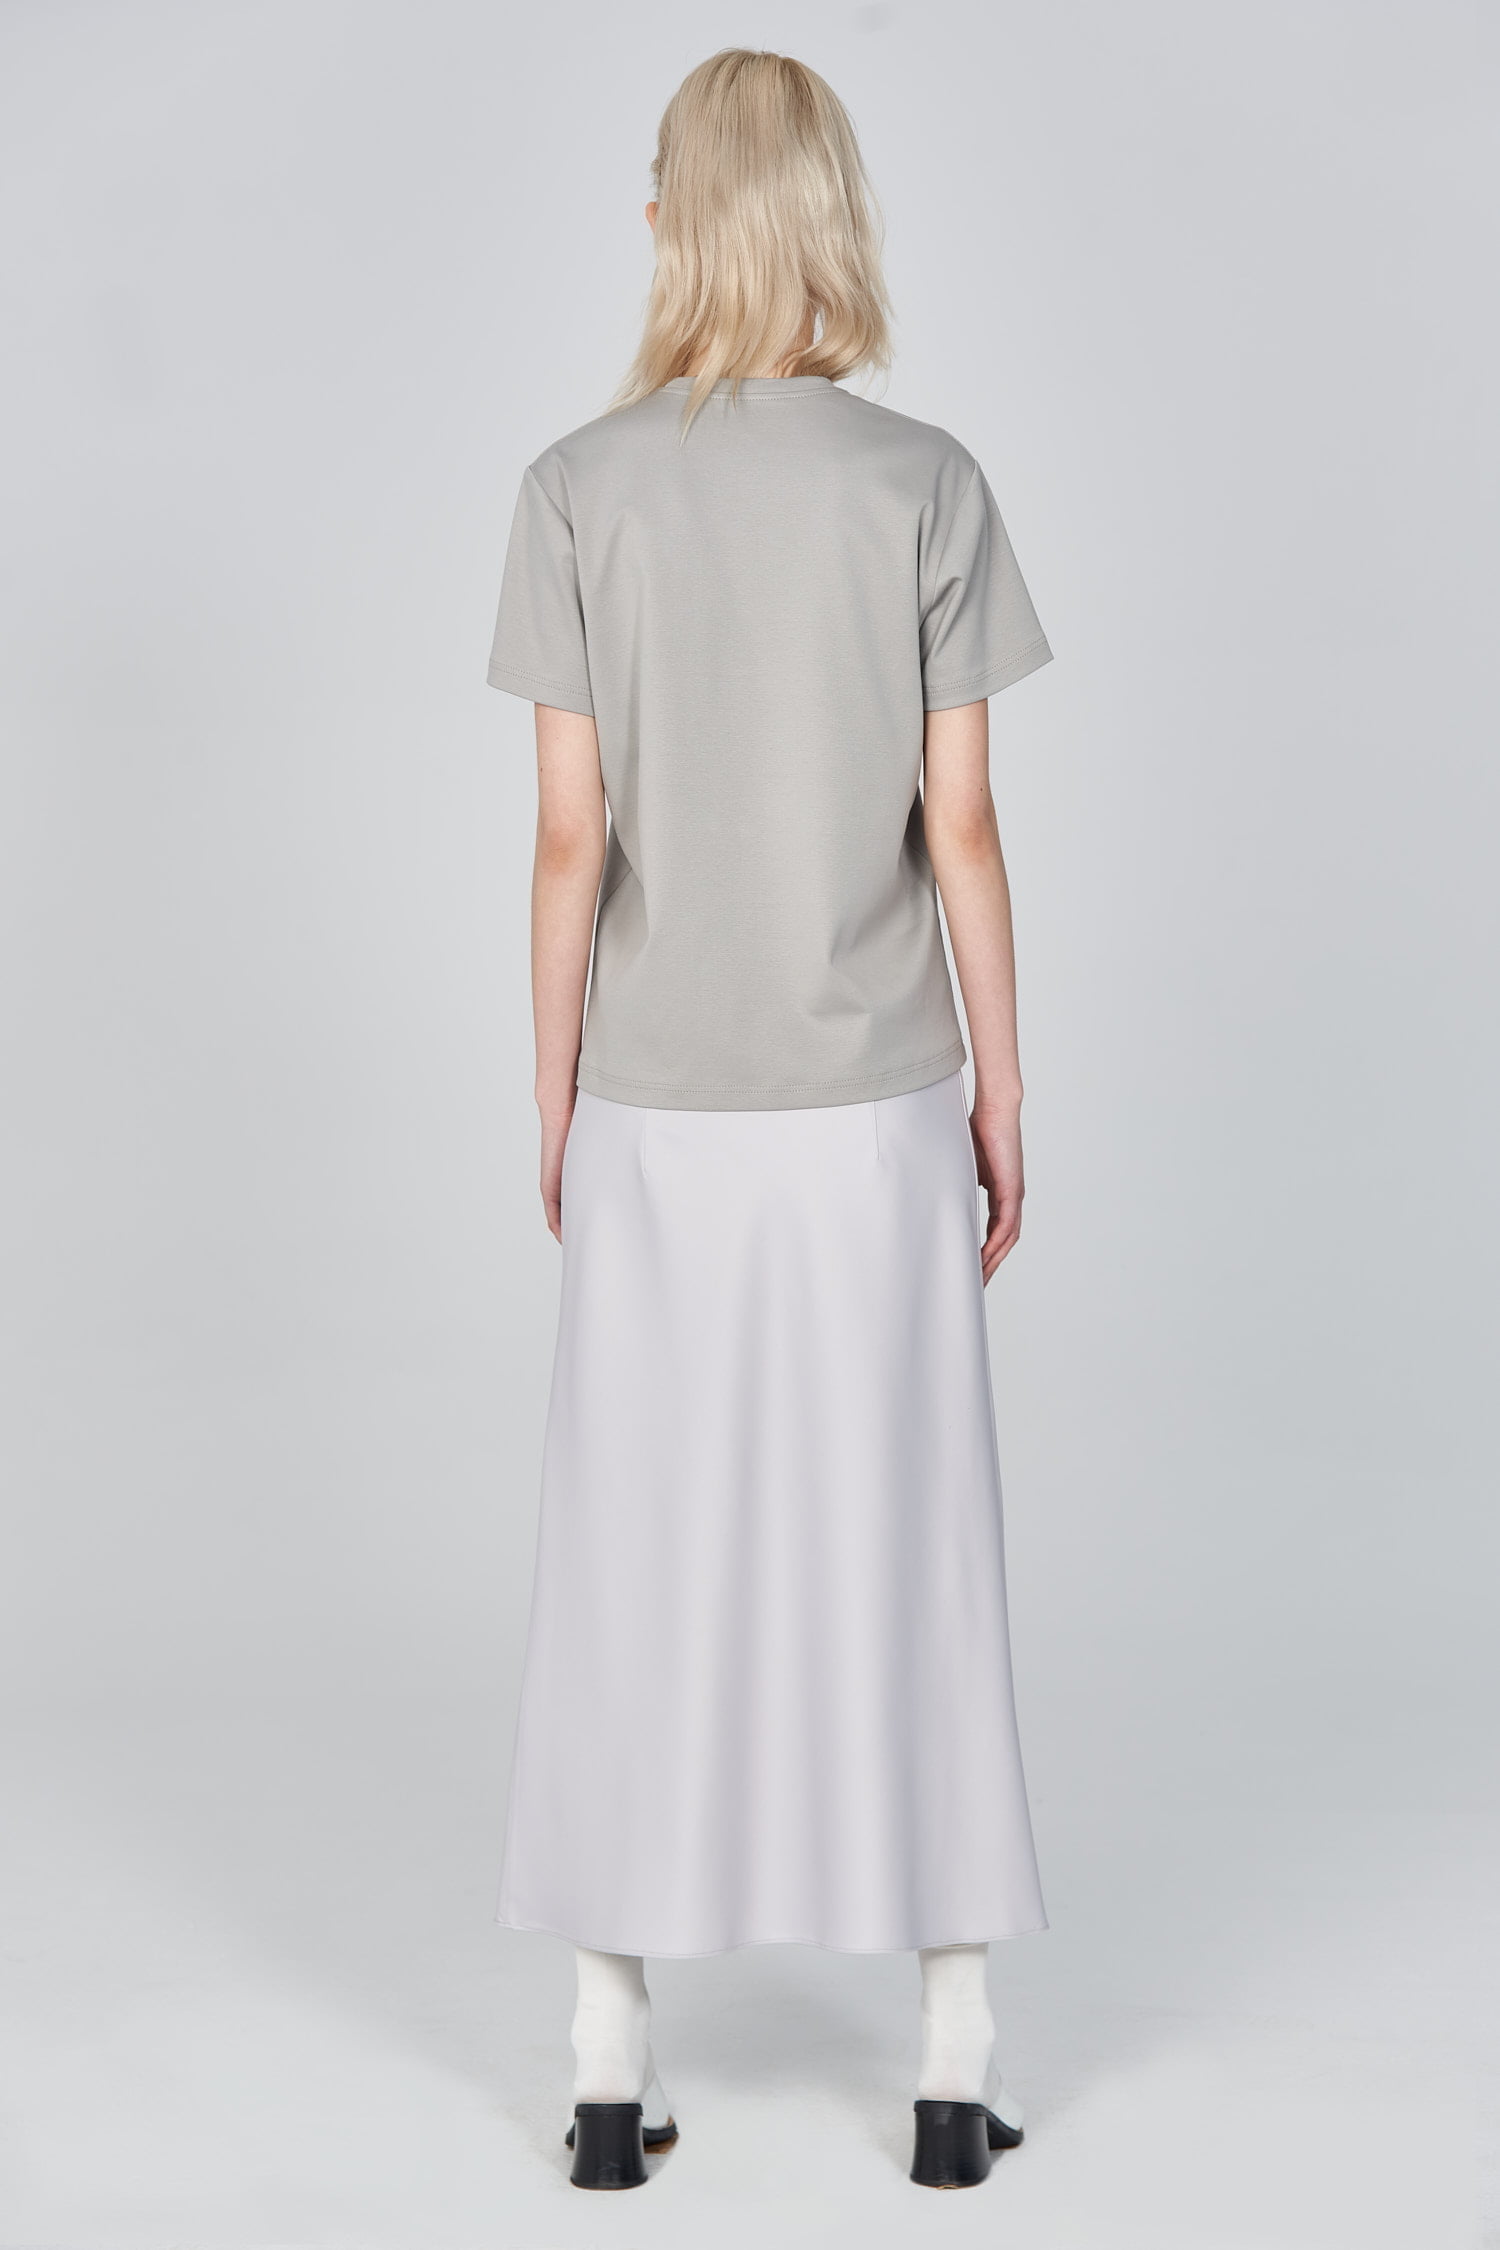 Acephala Ss21 Grey Logo T Shirt Silver Satin Skirt Back